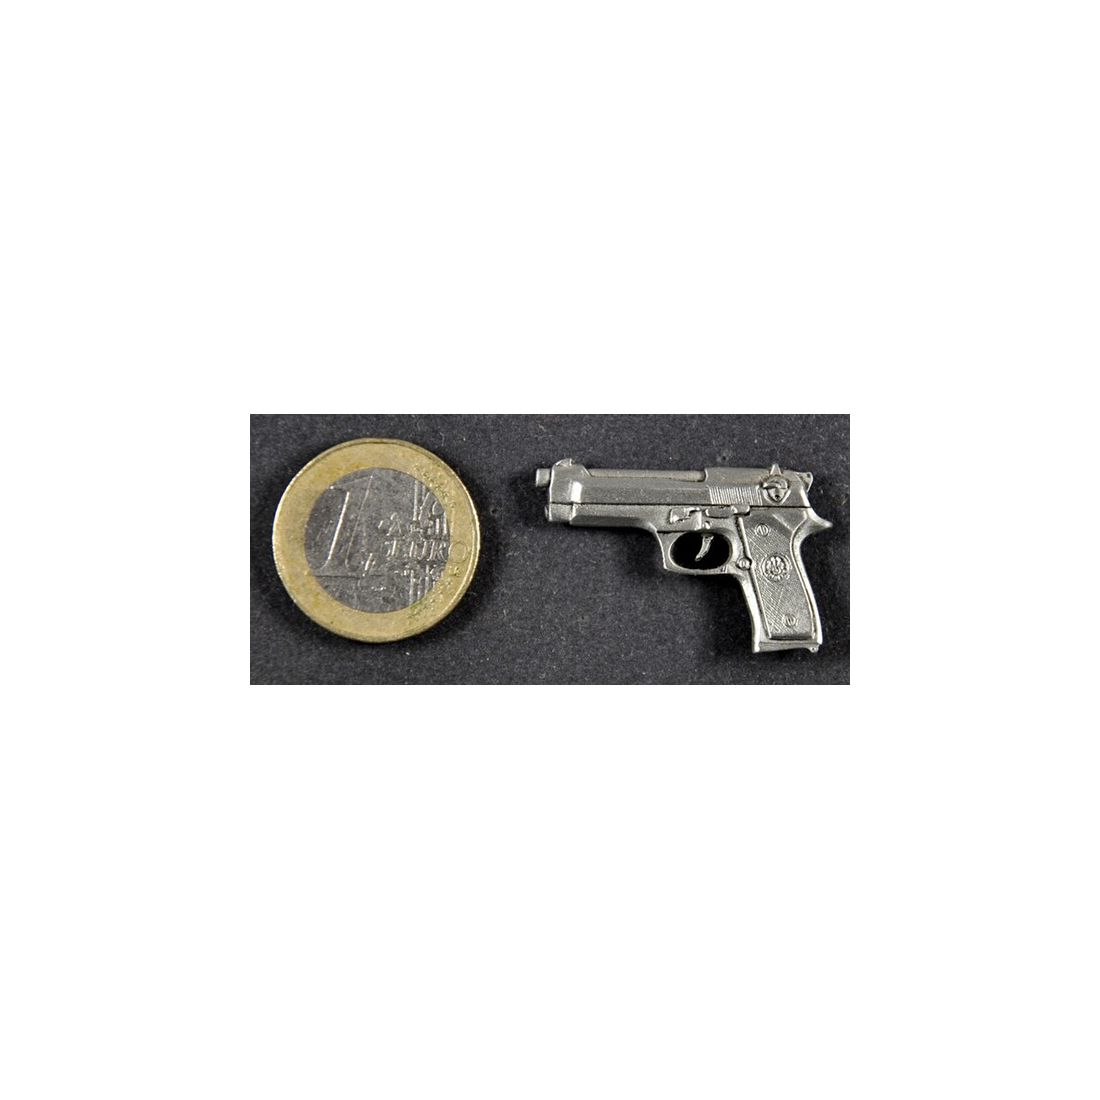 Beretta 92 Pistole als Metall-Anstecker